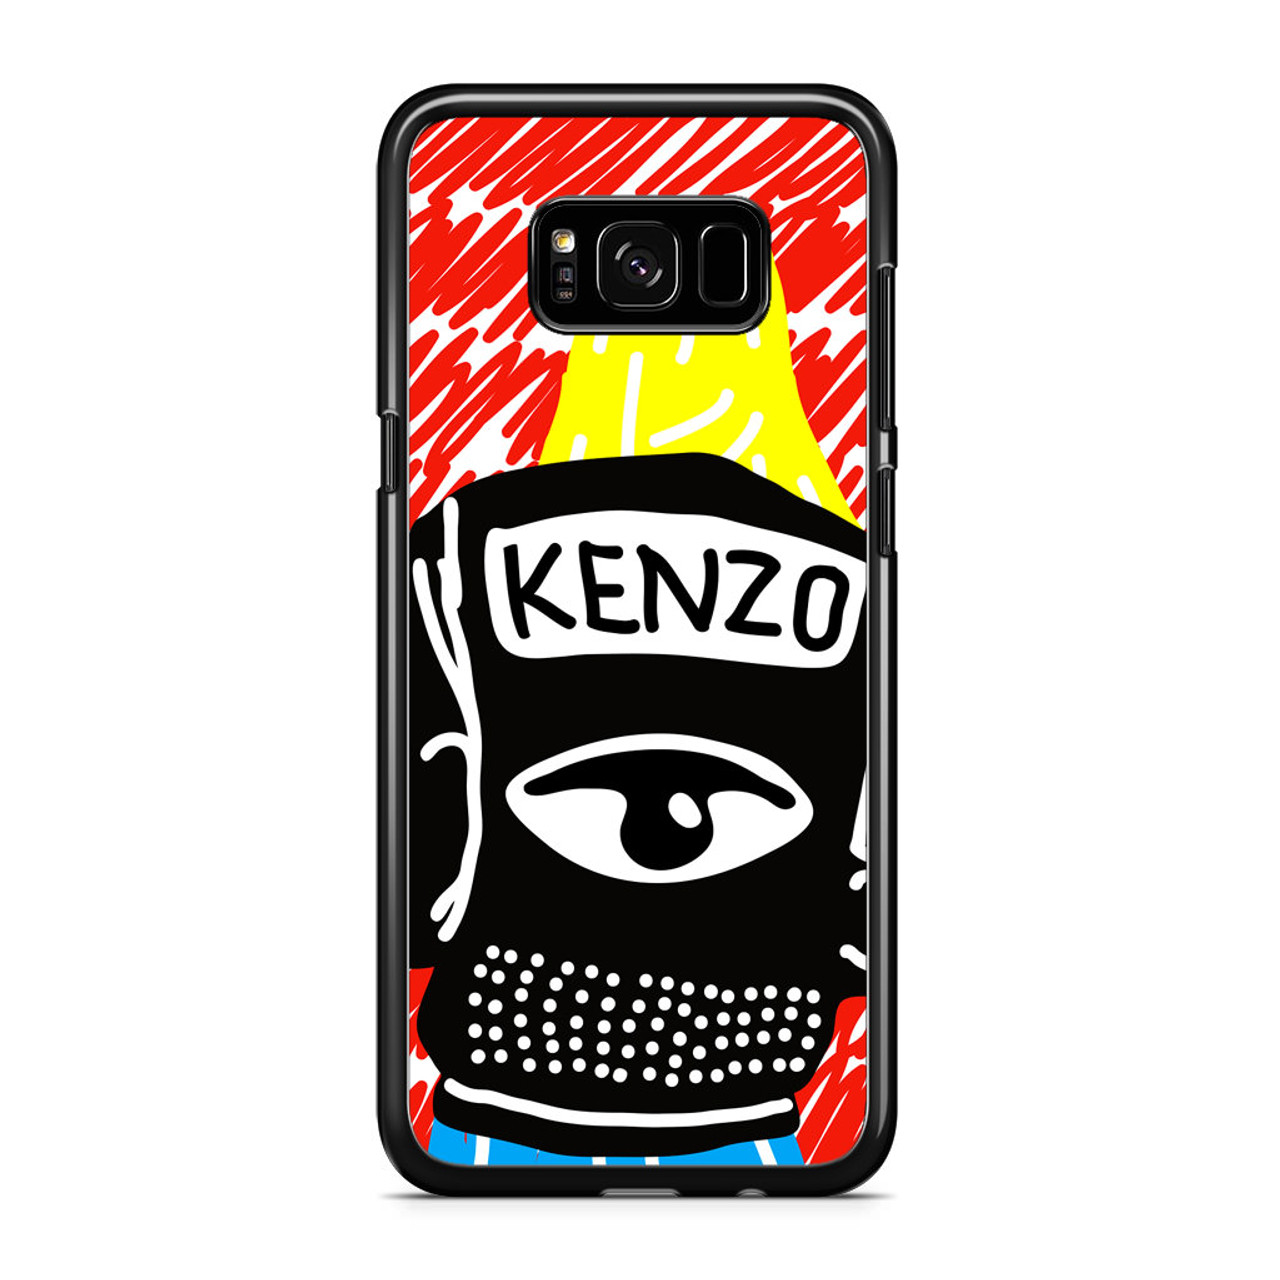 Kenzo Toni Halonen Samsung Galaxy S8 